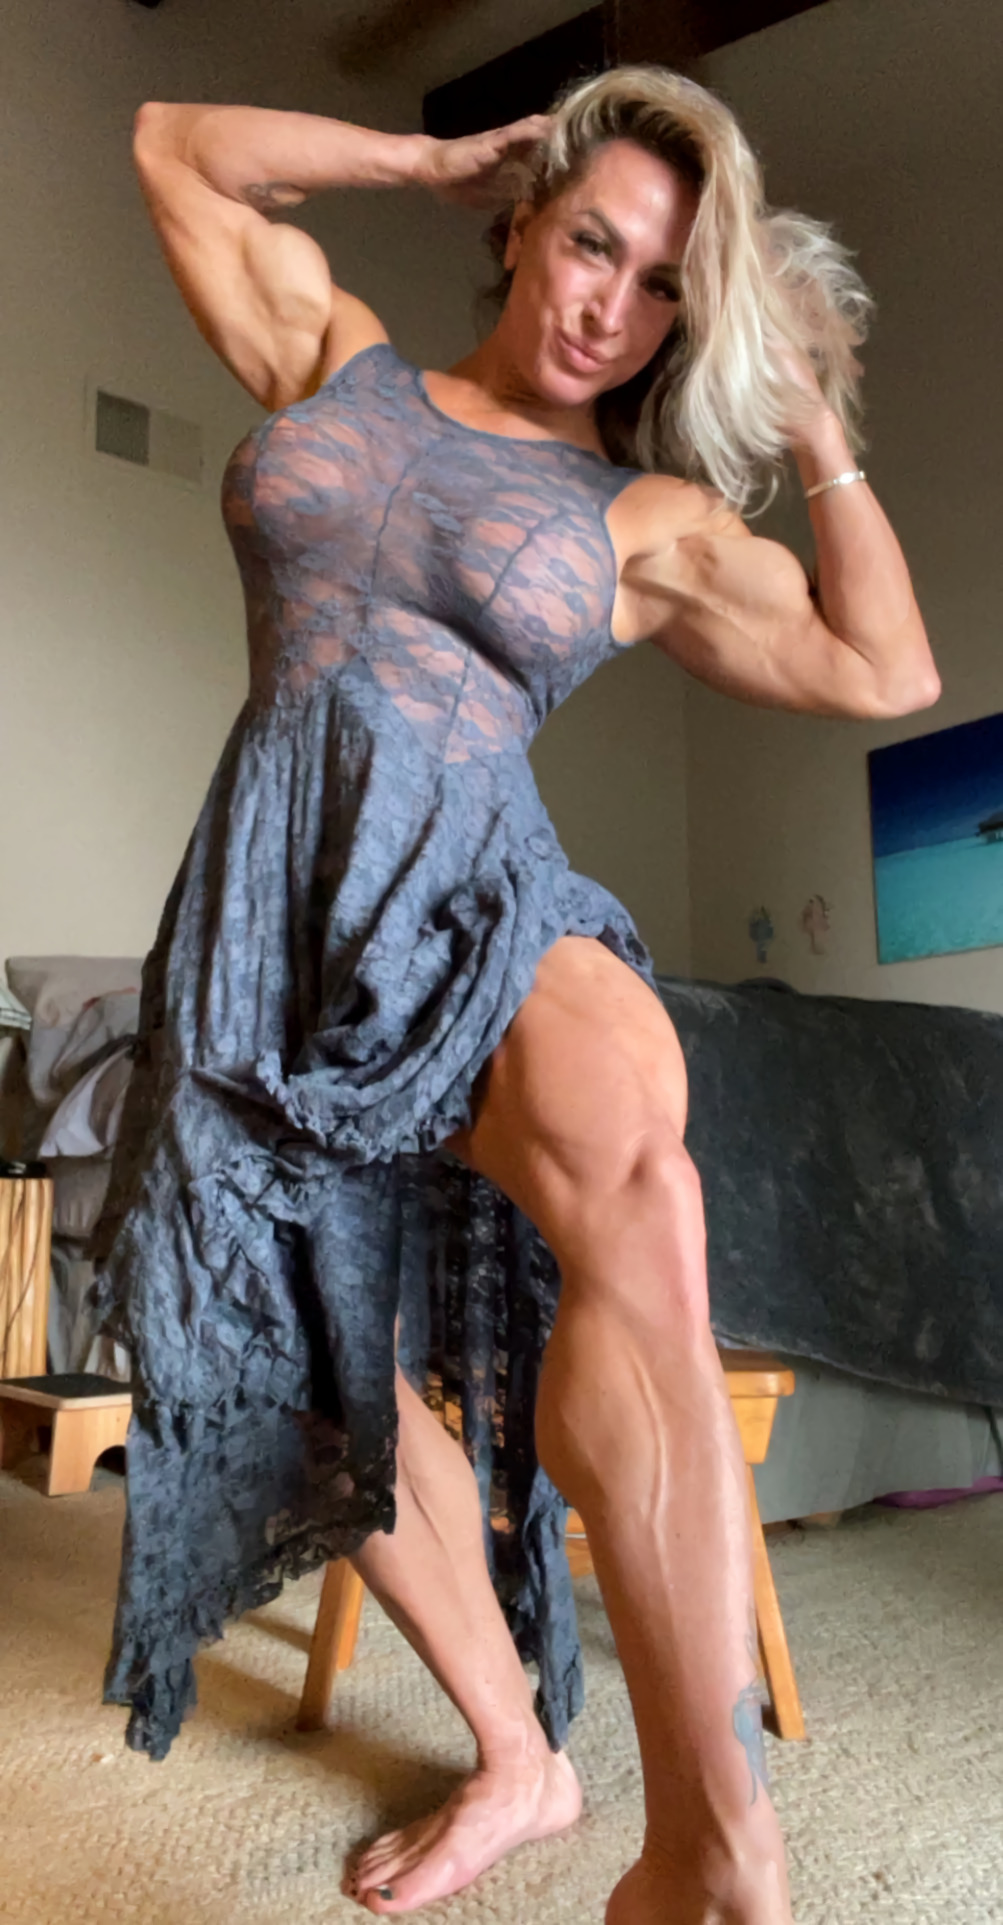 Muscle domina heather armbrust @thespiritualbadass nude pics